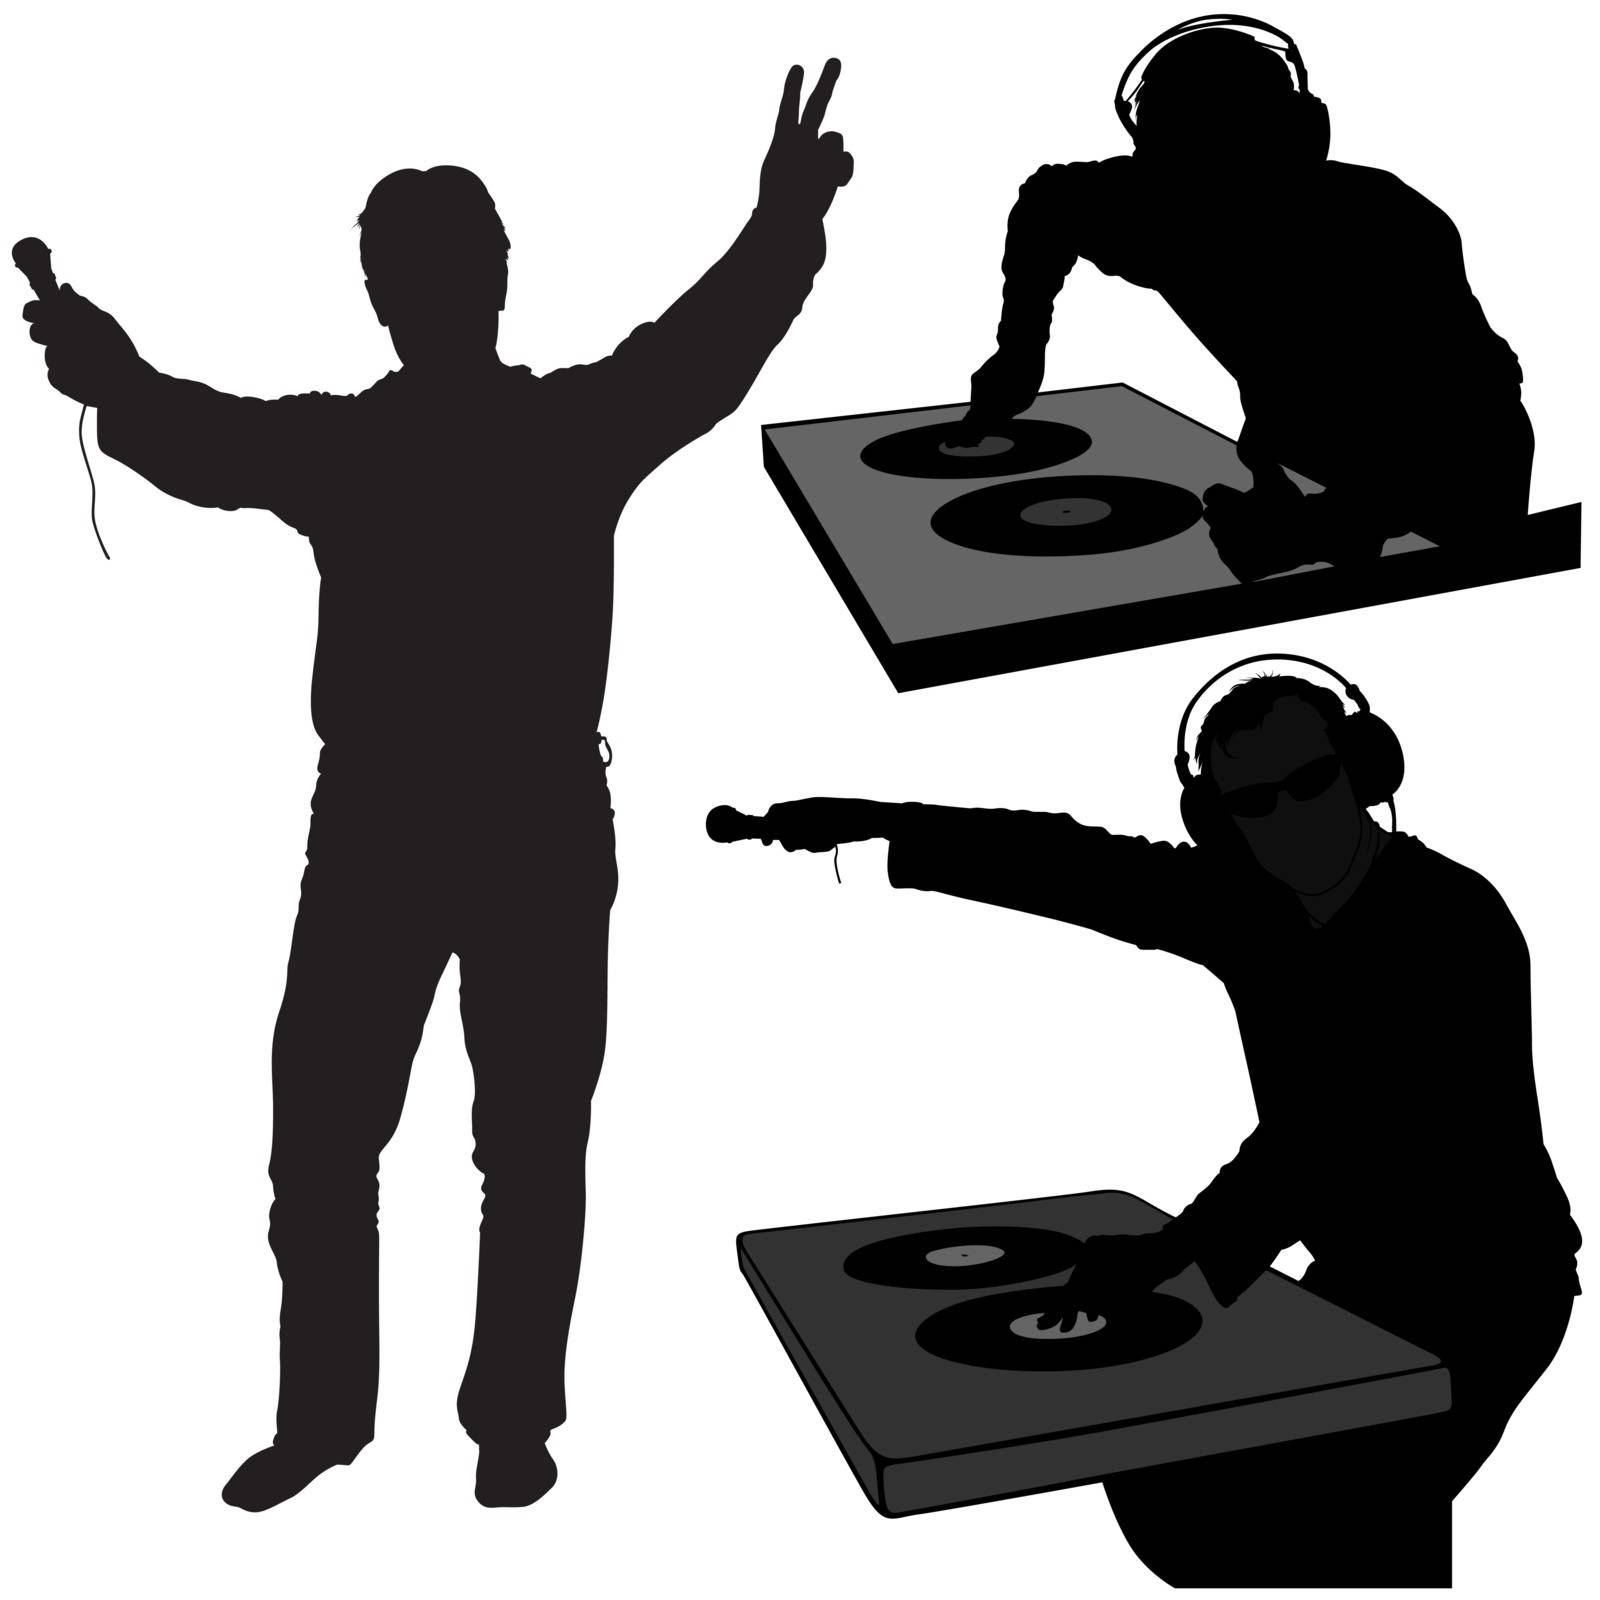 DJ Silhouettes by illustratorCZ